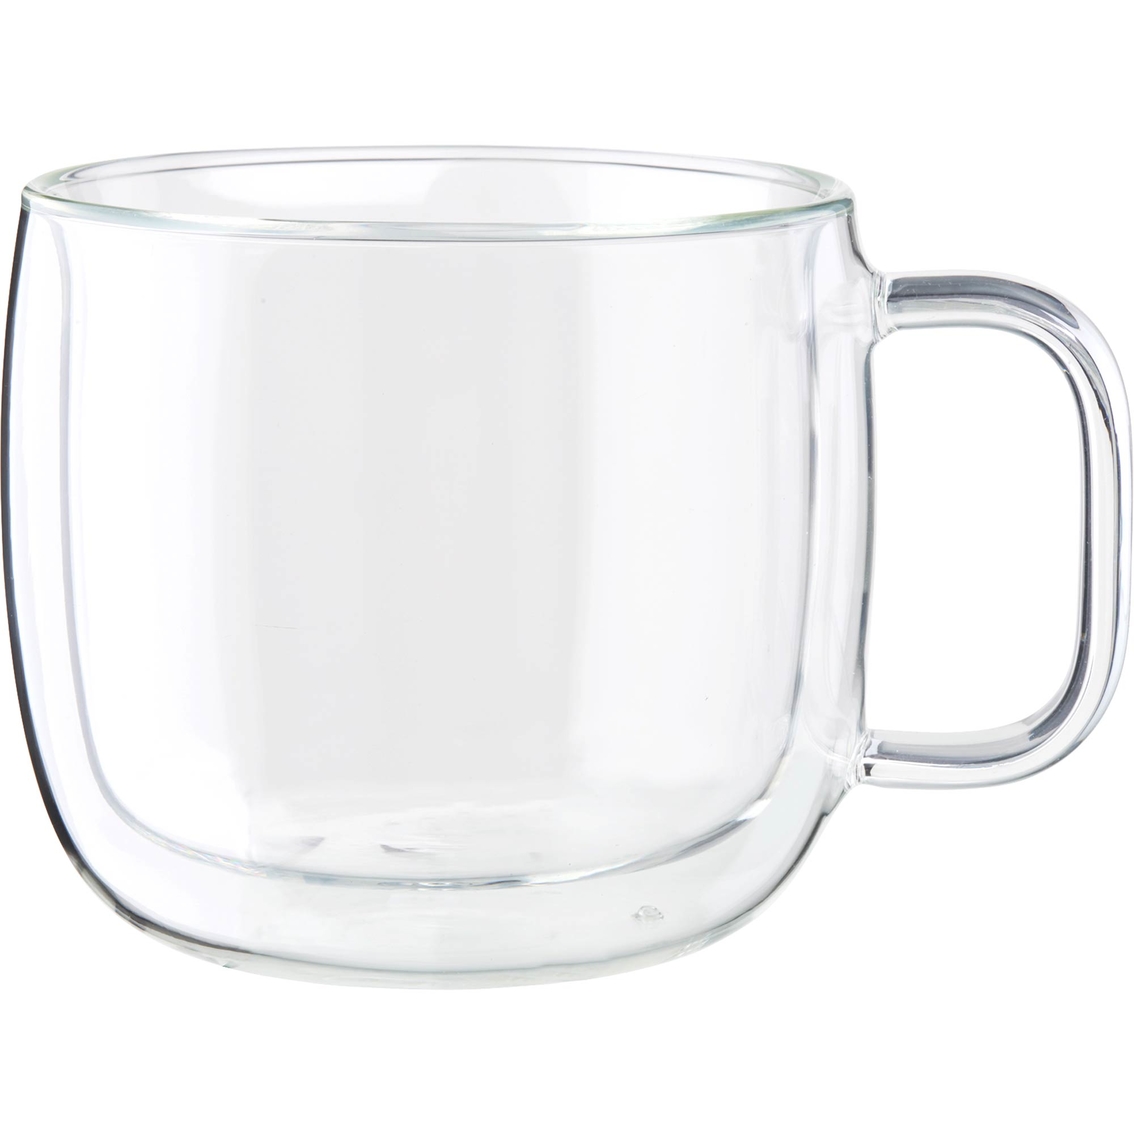 ZWILLING Sorrento Plus Double Wall Glassware 4-pc Mug set